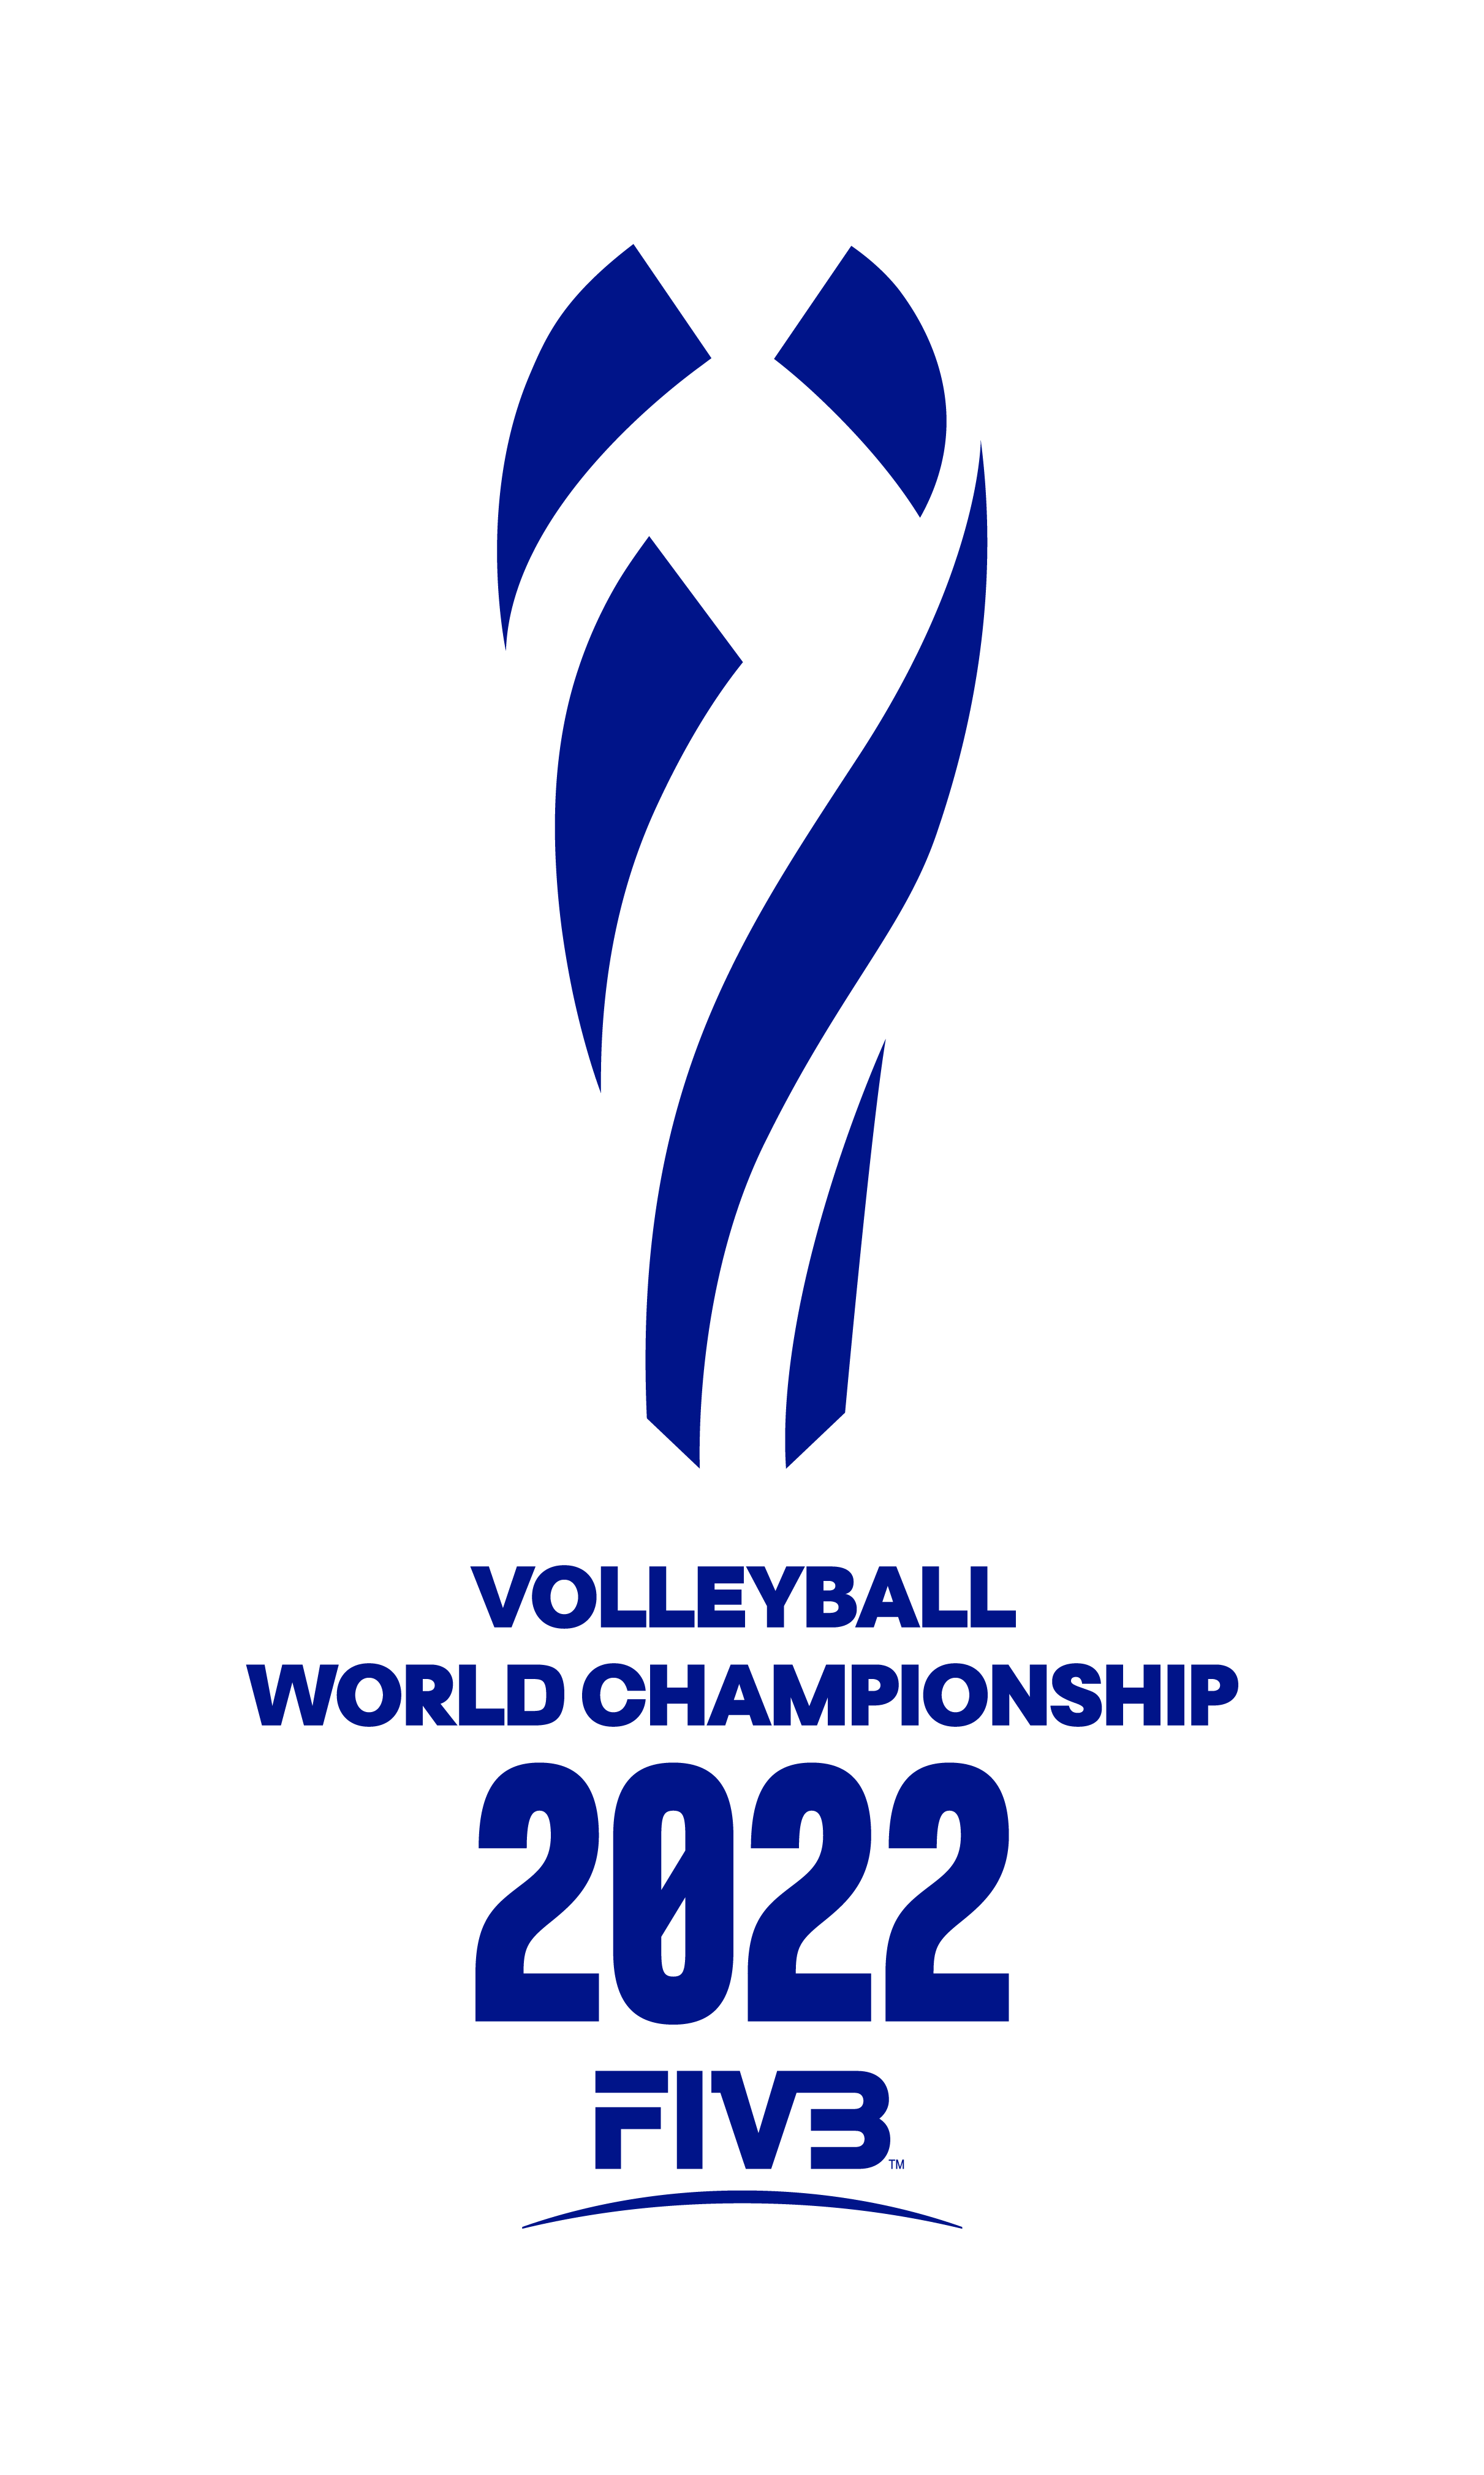 FIVB Men's World Championship 2022 | volleyballworld.com